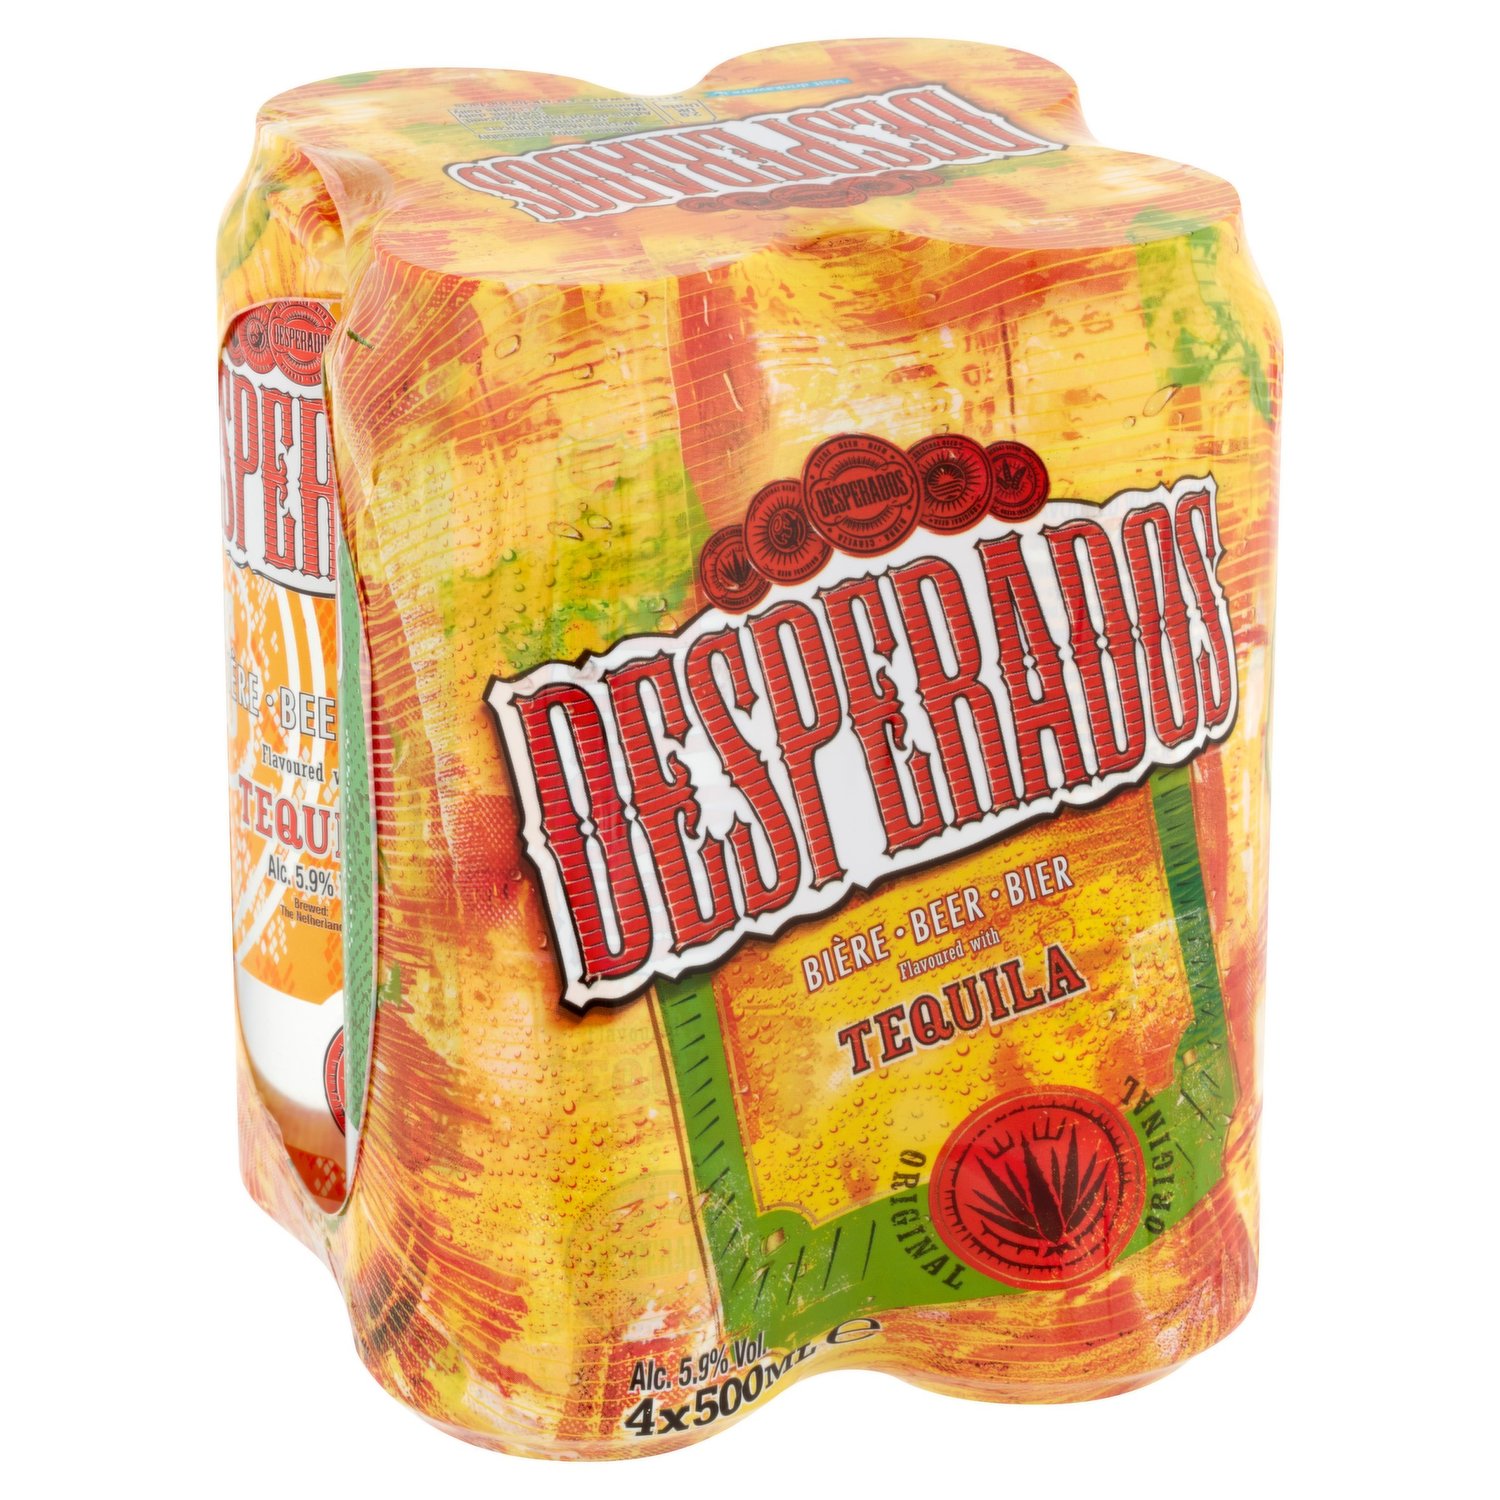 desperados original beer flavoured with tequila